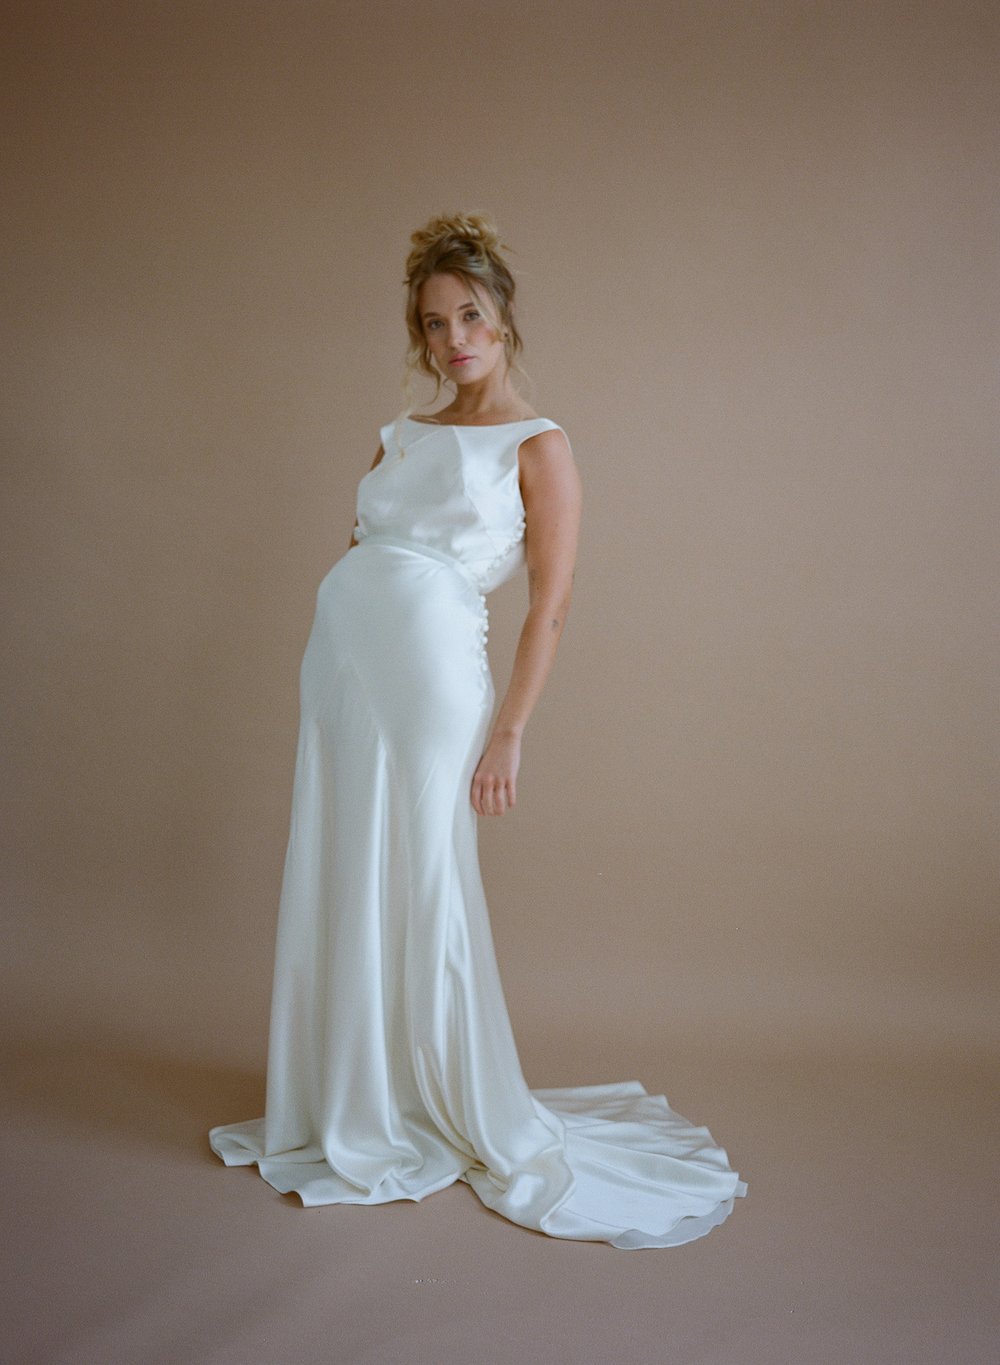 Analogue-shoot-Hollie-Cornish-photographer-Kate-Beaumont-wedding-gowns-Sheffield-43.jpg